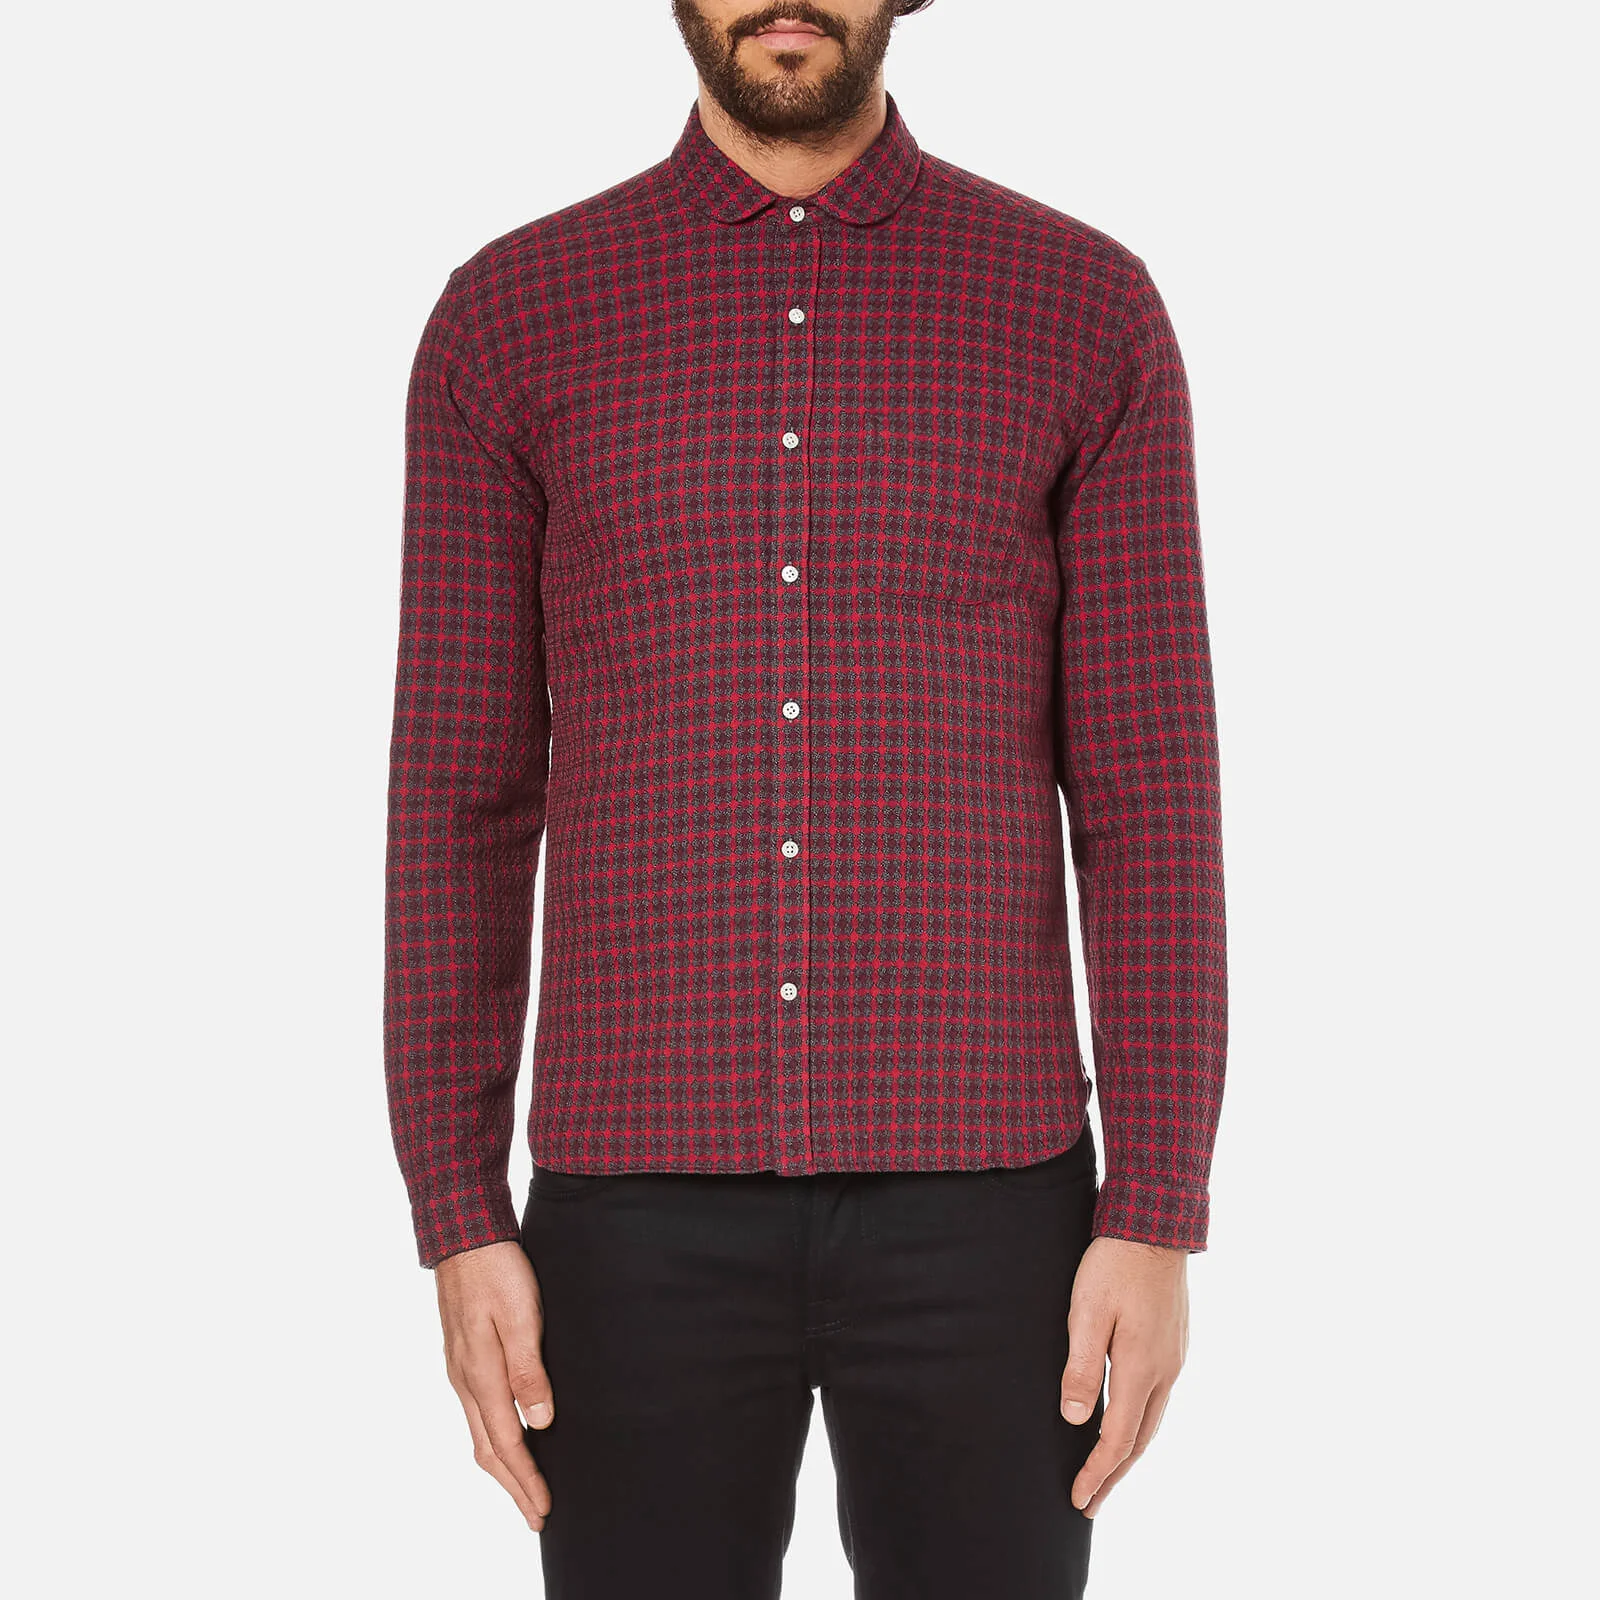 Oliver Spencer Men's Eton Collar Shirt - Liscard Red Image 1